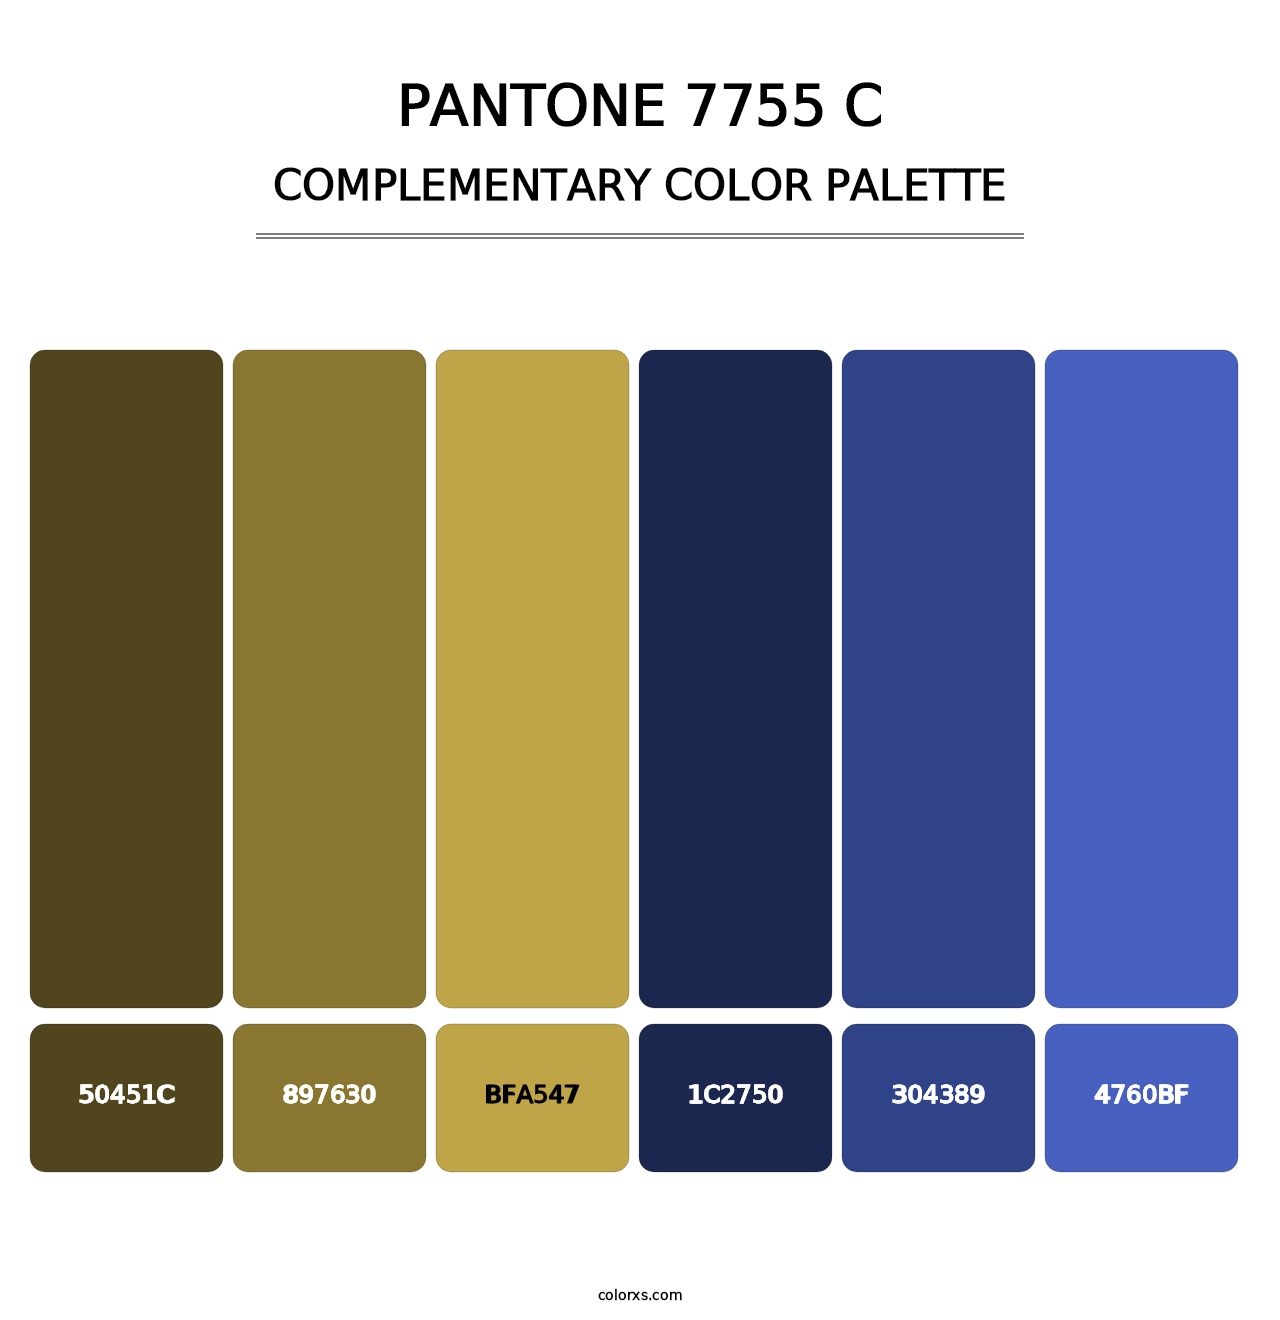 PANTONE 7755 C - Complementary Color Palette